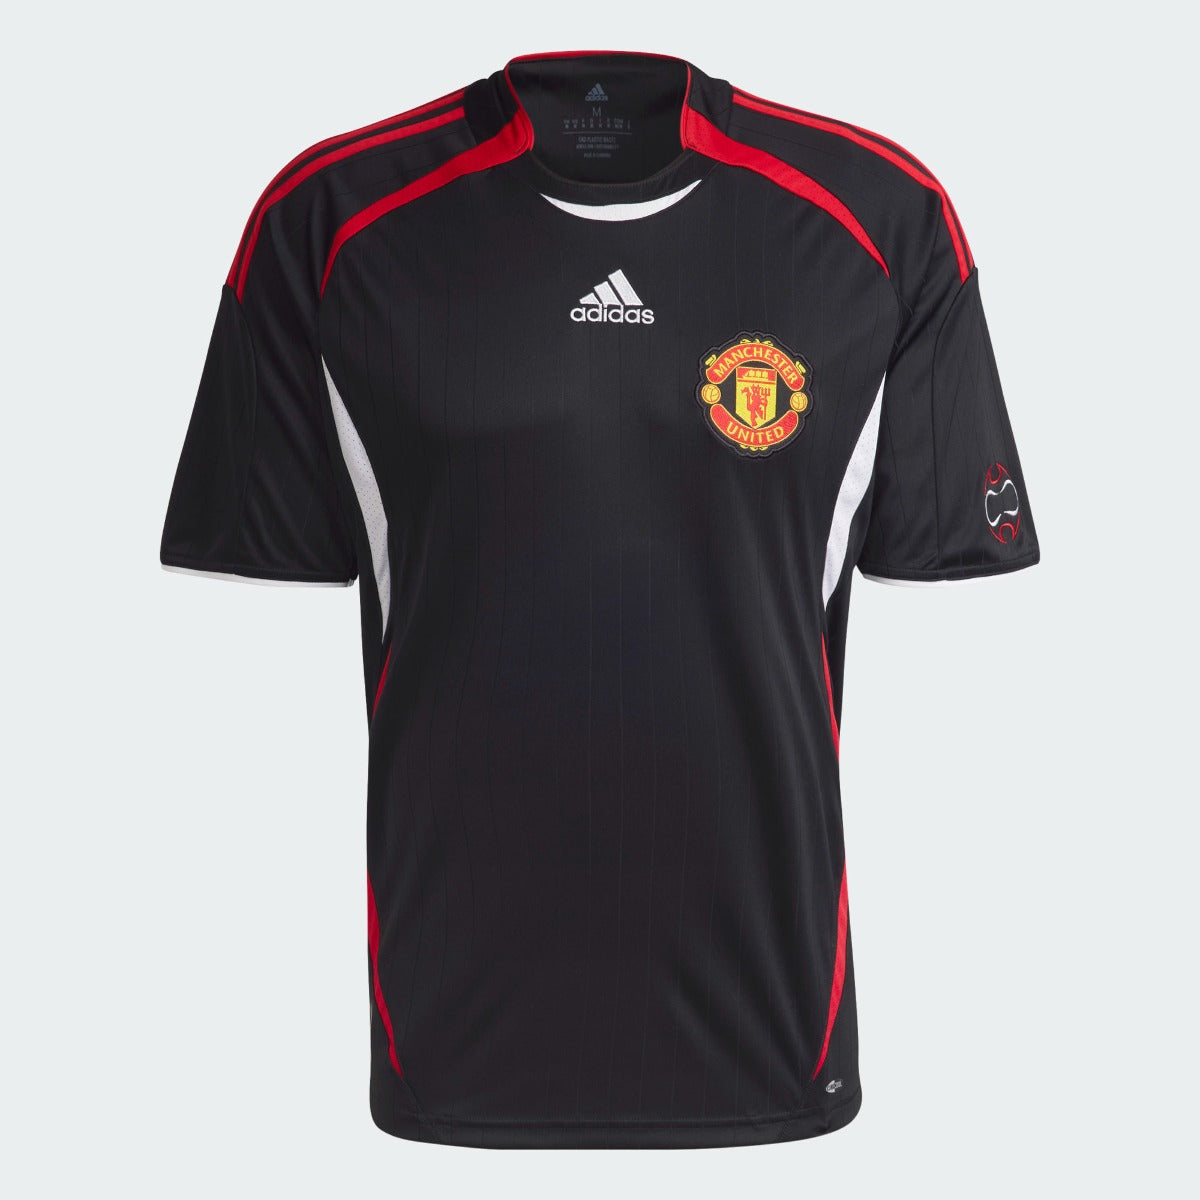 Adidas 2022 Manchester United Teamgeist Jersey - Black